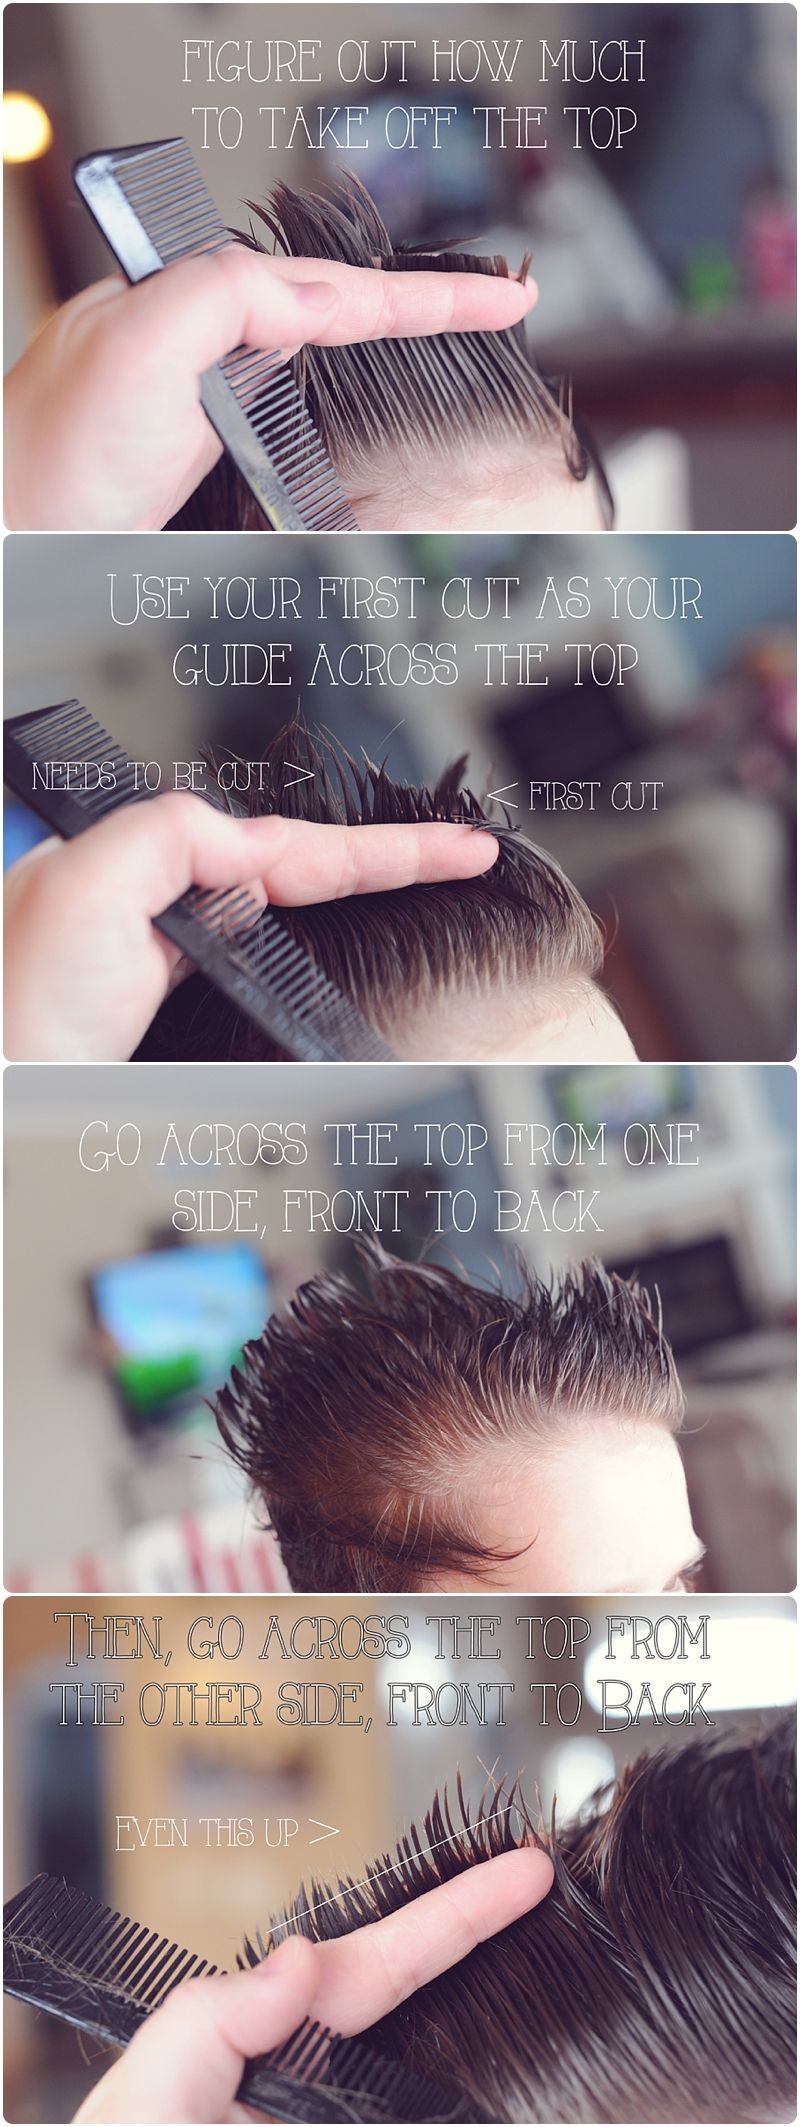 DIY: Boys’ Haircut